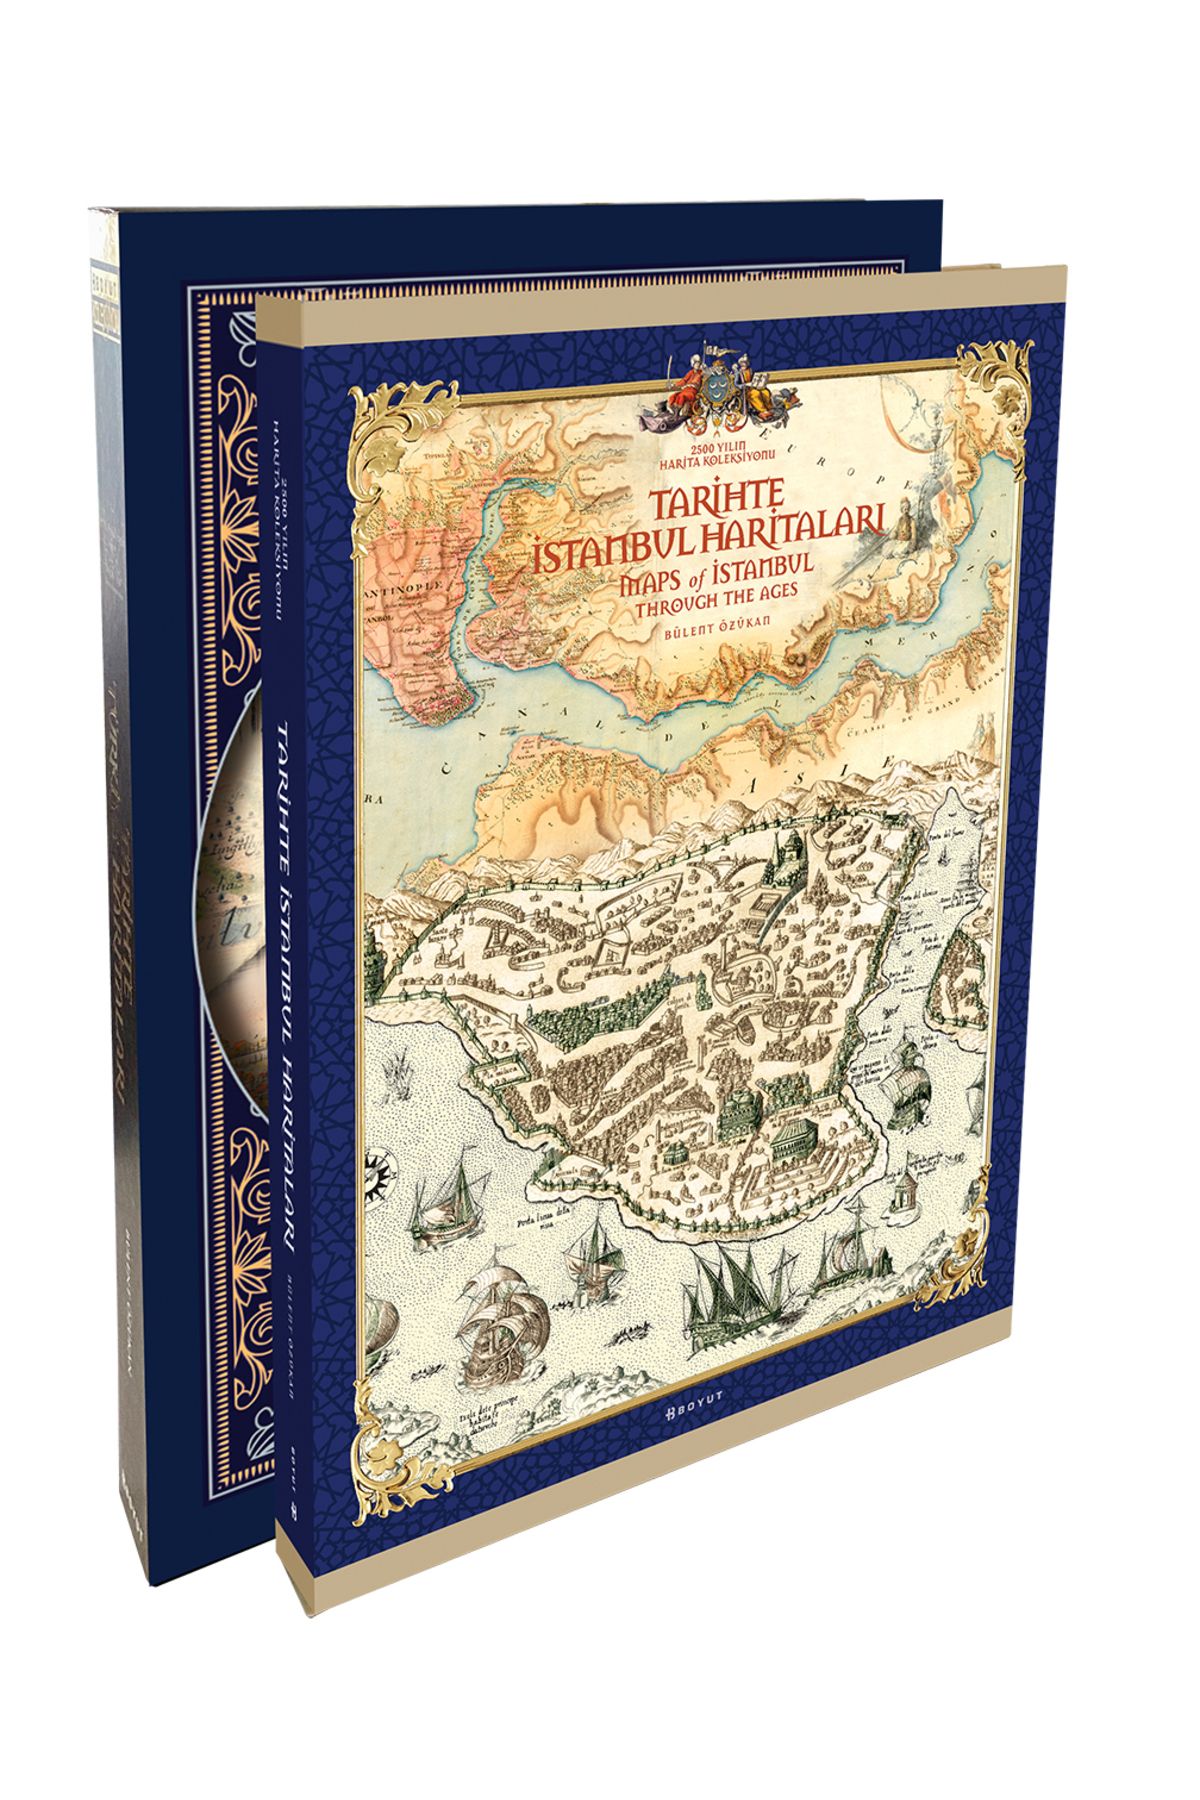 BOYUT YAYINLARI Tarihte İstanbul Haritaları /Maps of Istanbul Through the Ages